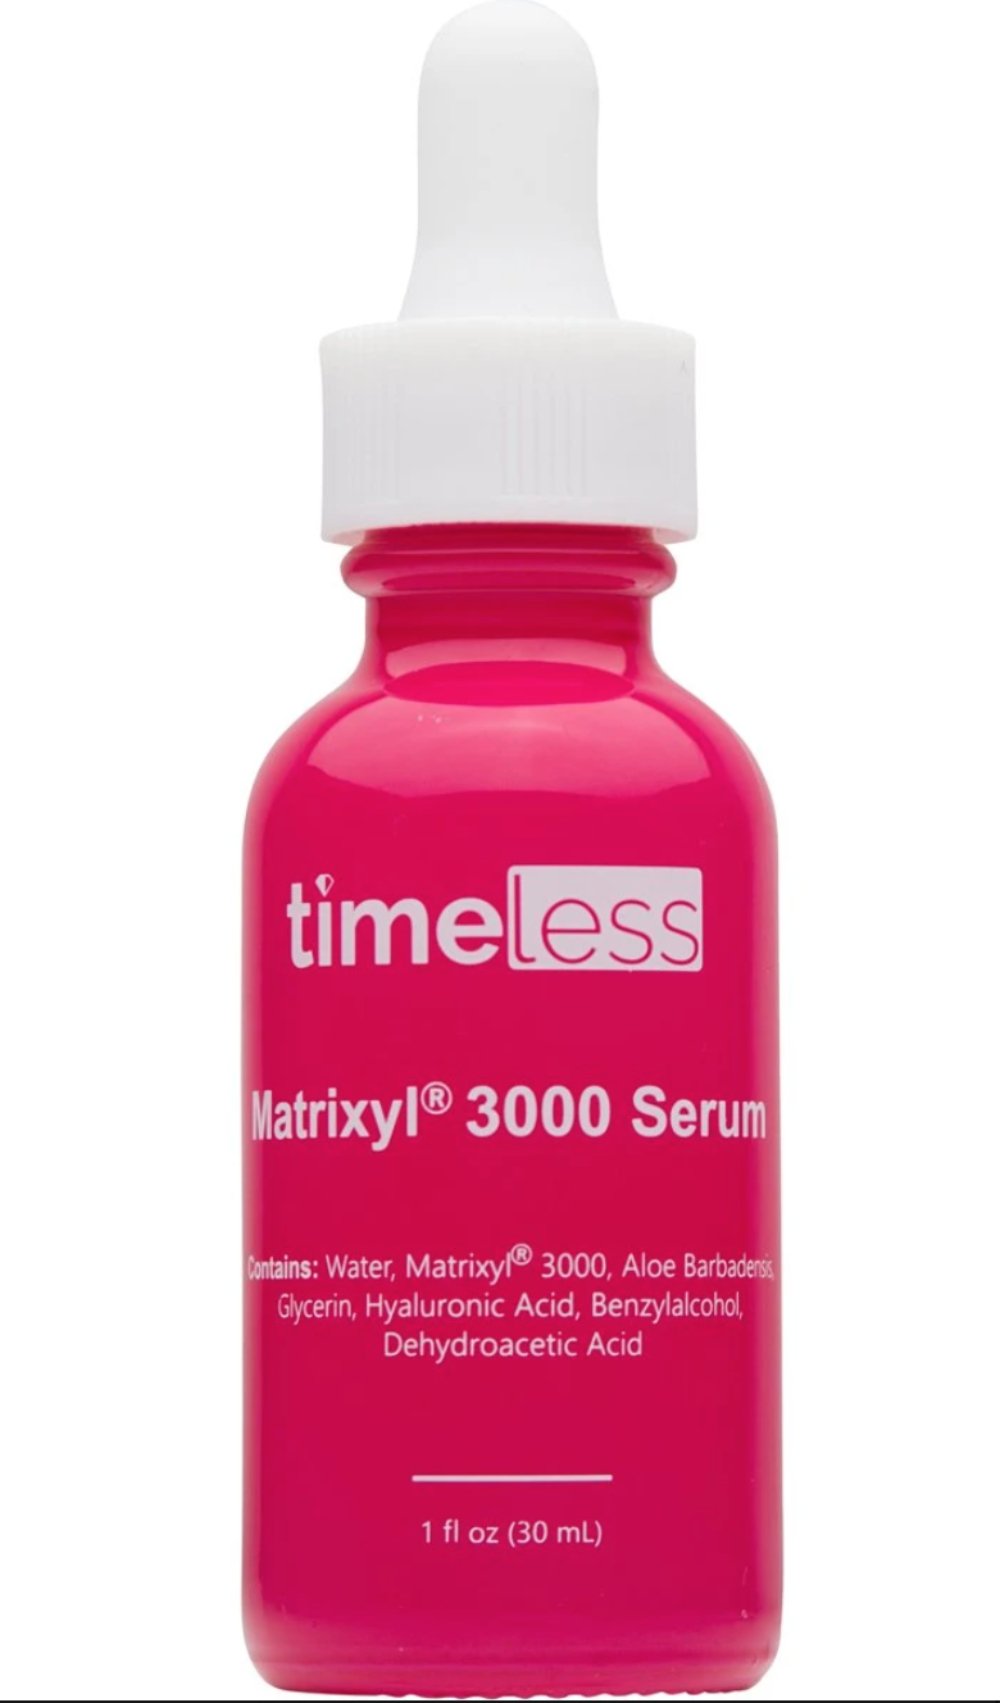 TIMELESS MATRIXYL 3000 Serum 30ml (1 fl oz) - The Face Method